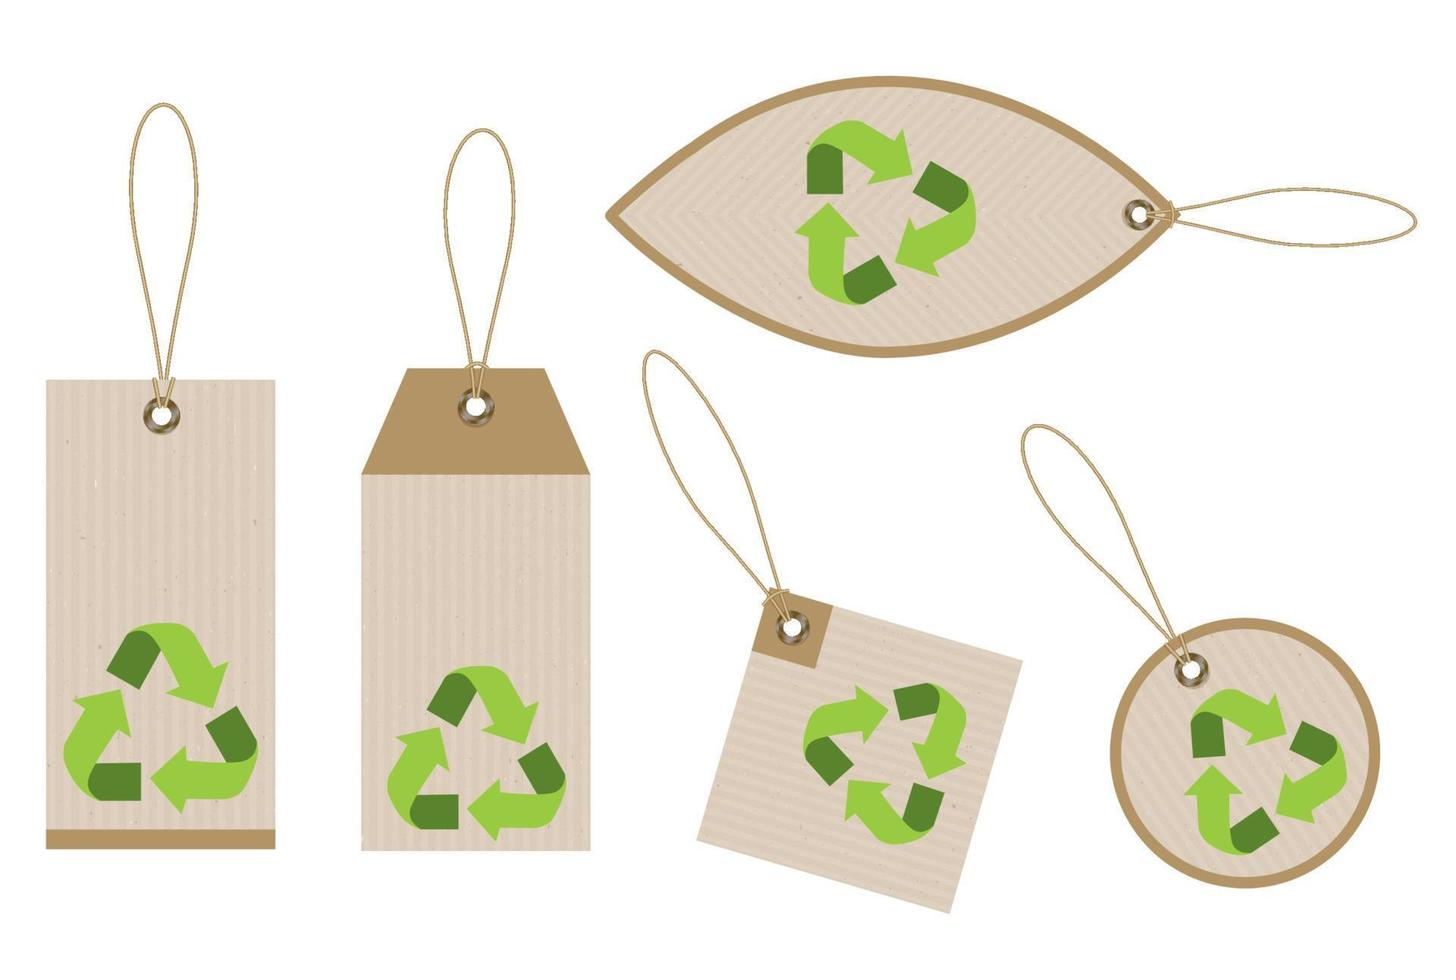 conjunto de etiquetas ecológicas em papel artesanal com corda. conjunto de vetores isolados bio reciclados